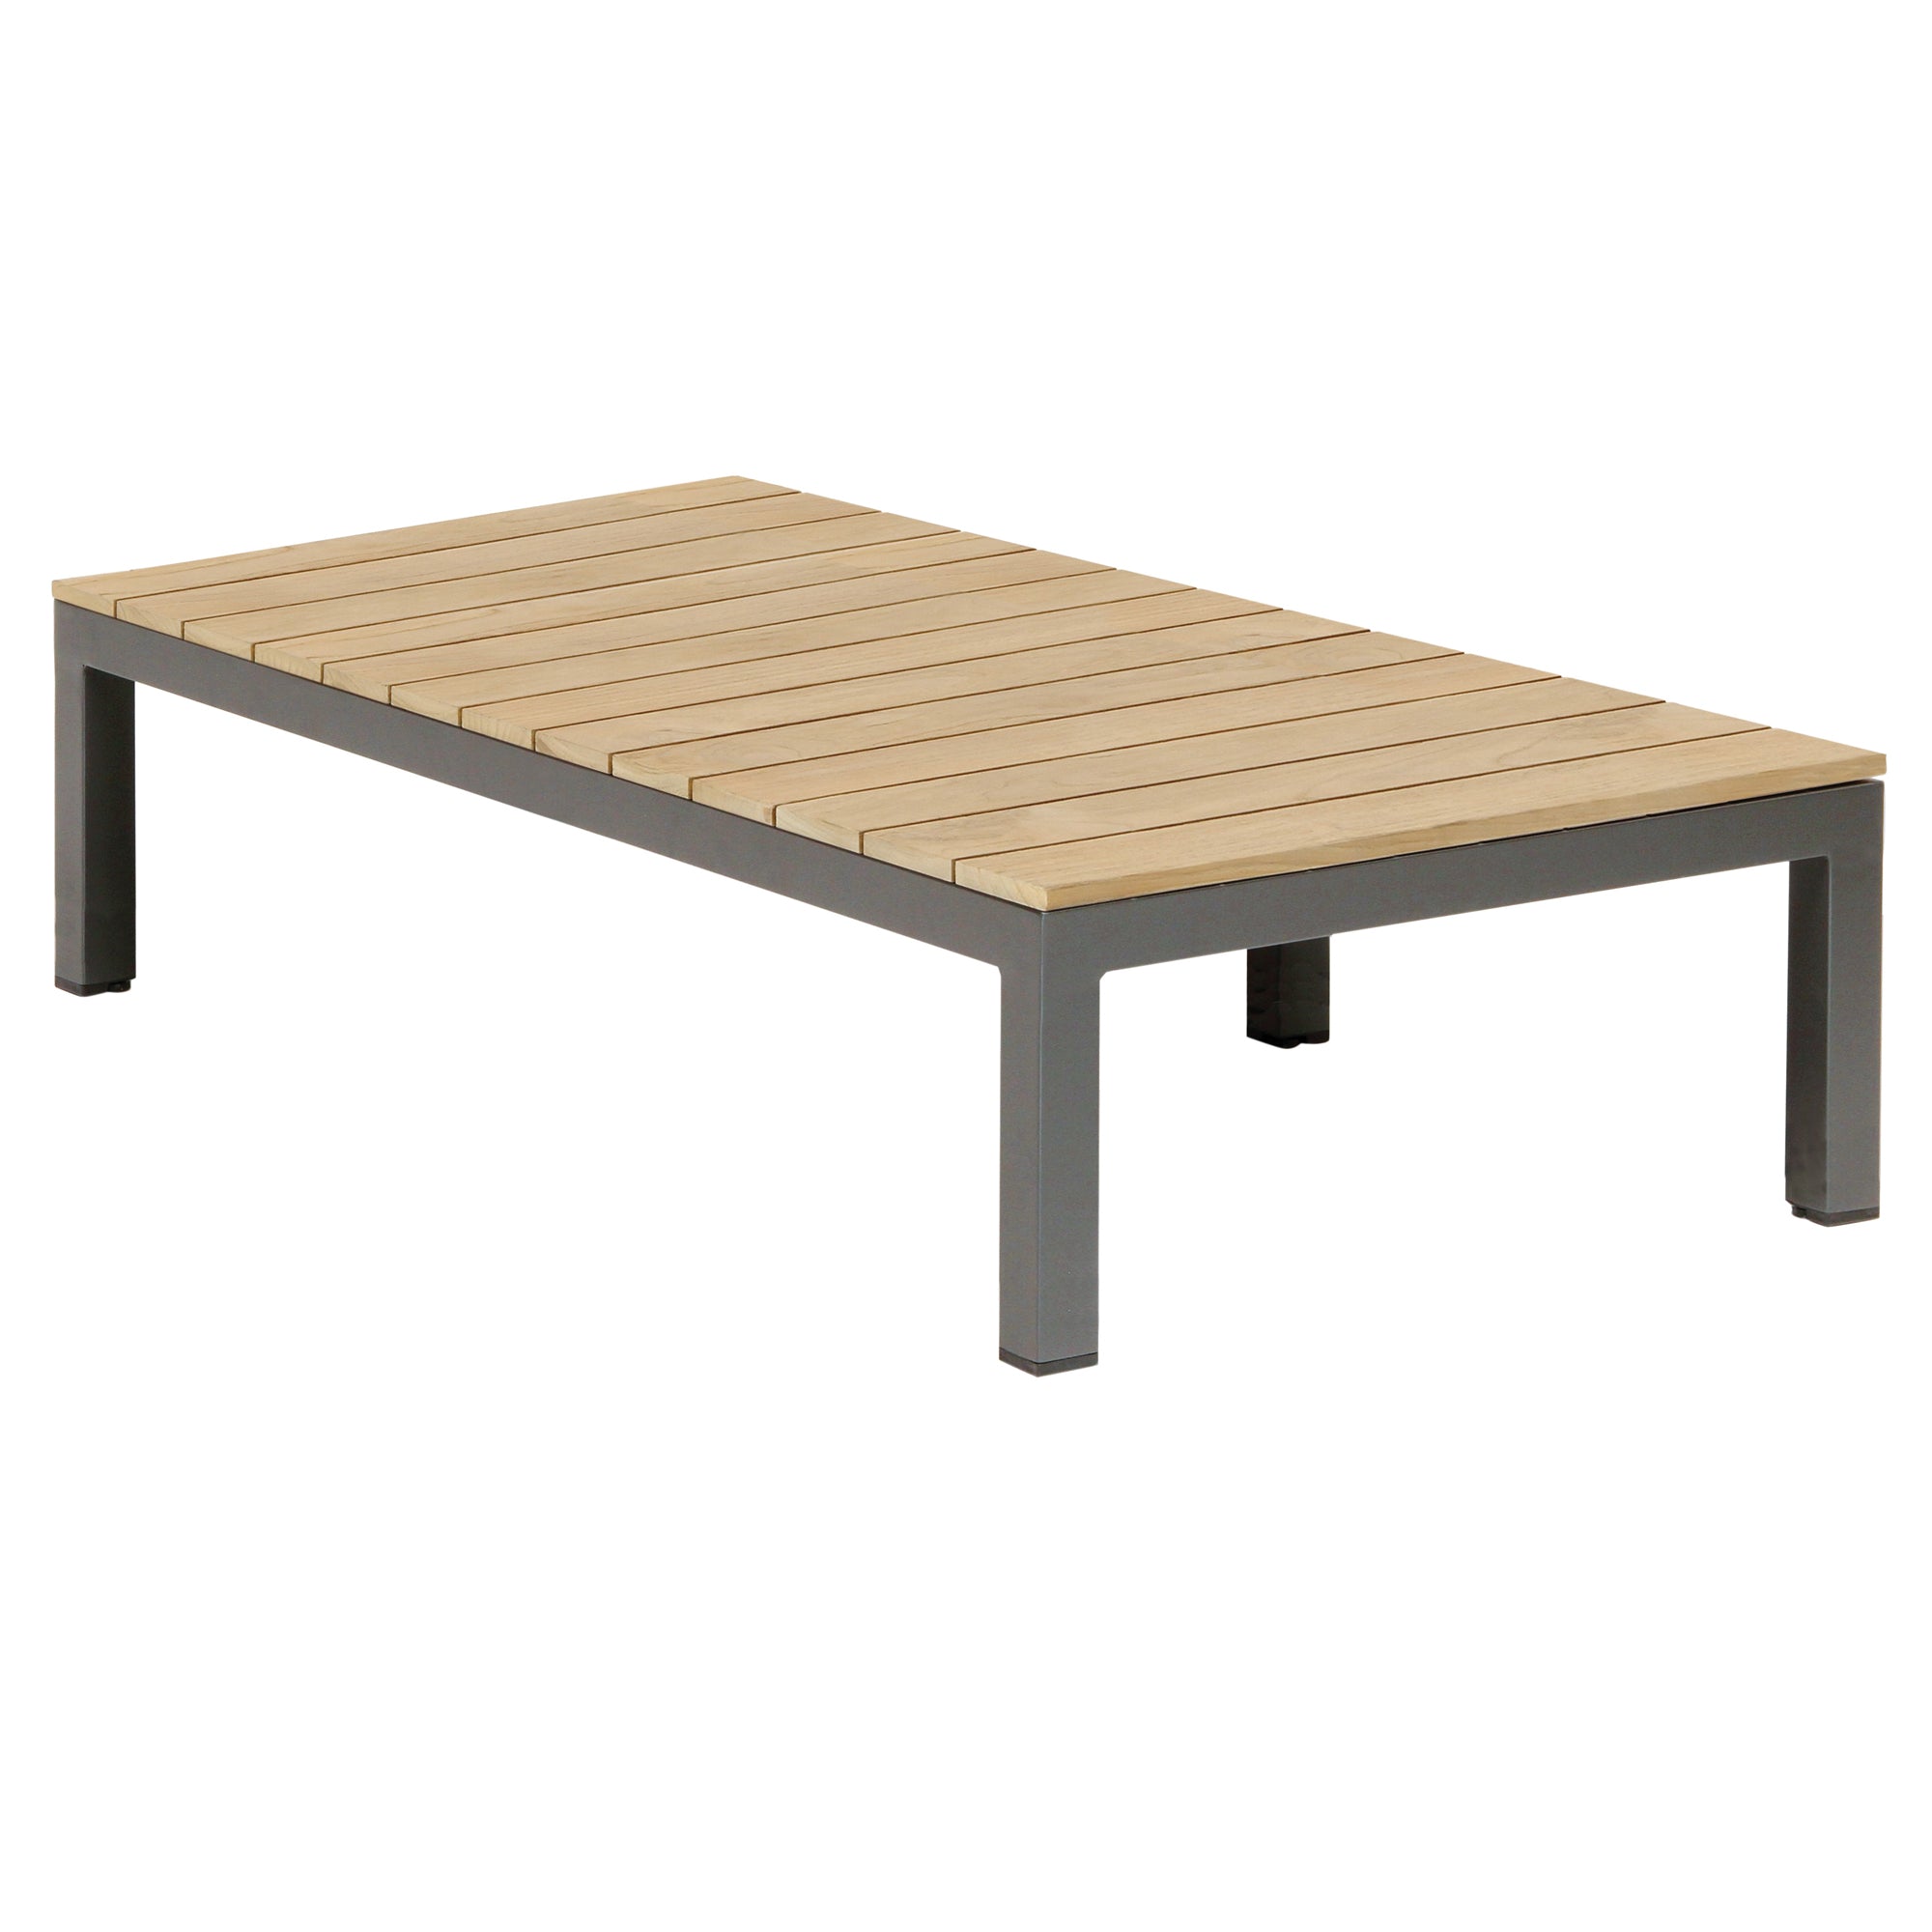 49”x 28” Elba Comfort Rectangular Coffee Table With Teak Top